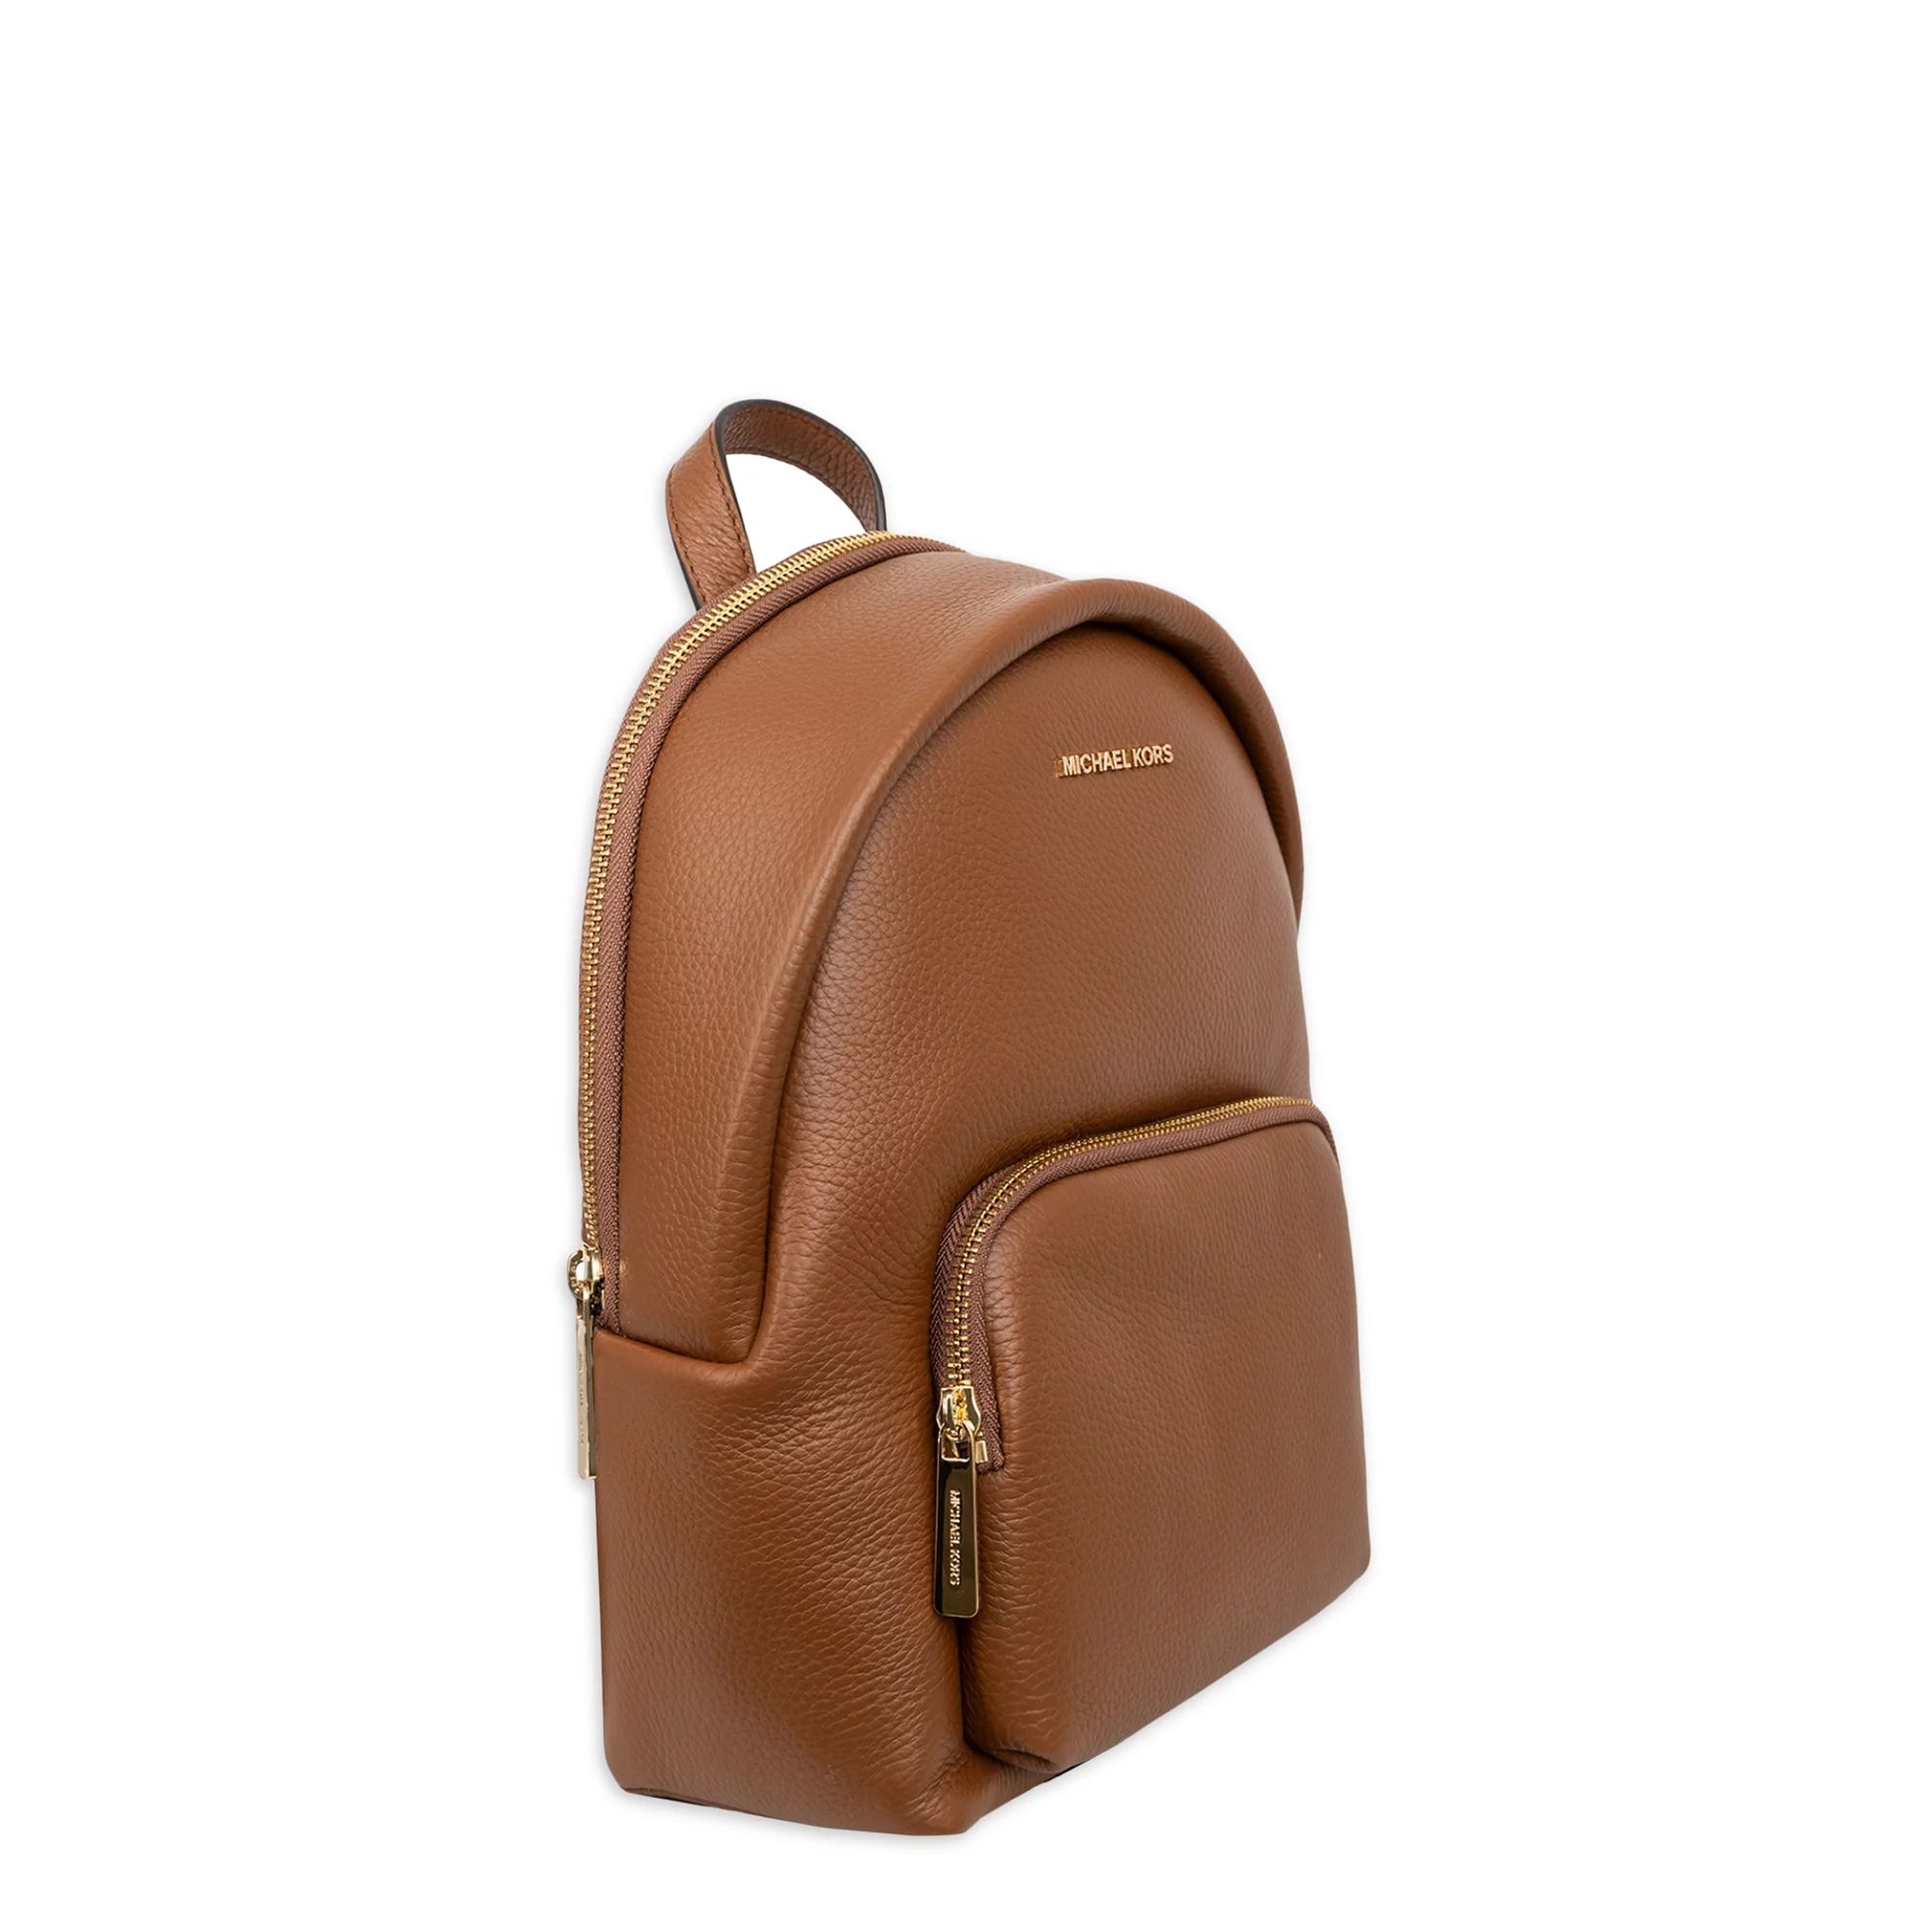 Michael Kors Women's Erin Medium Pebbled Leather Backpack - Luggage- Brown | Walmart (US)